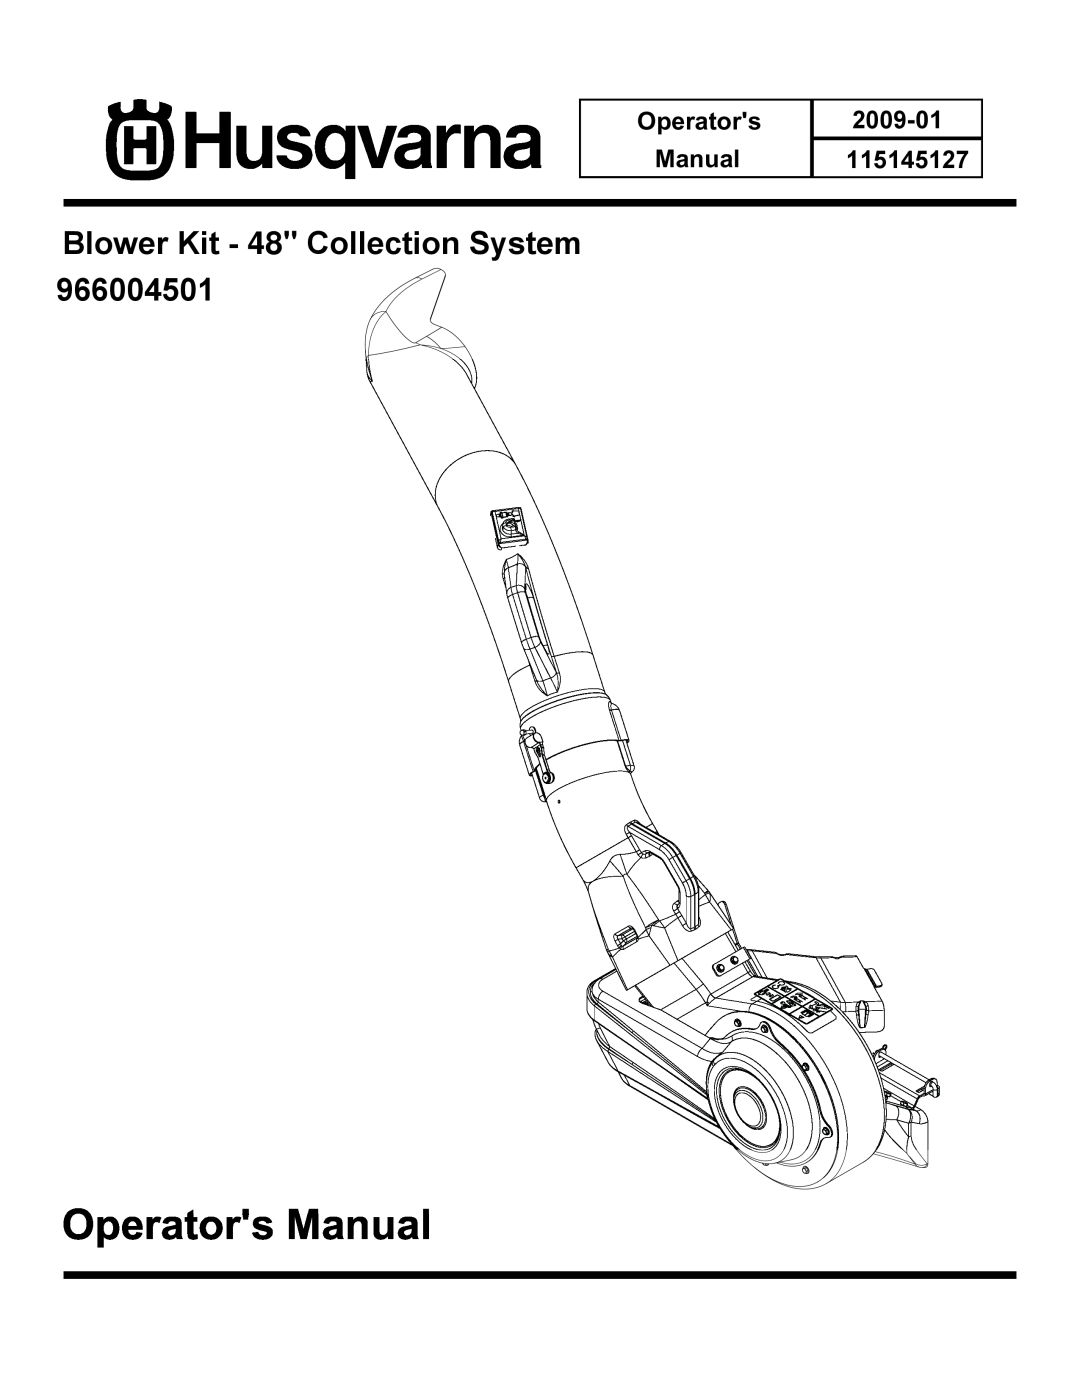 Husqvarna 2009-01, 966004501 manual Operators Manual, Blower Kit - 48 Collection System 